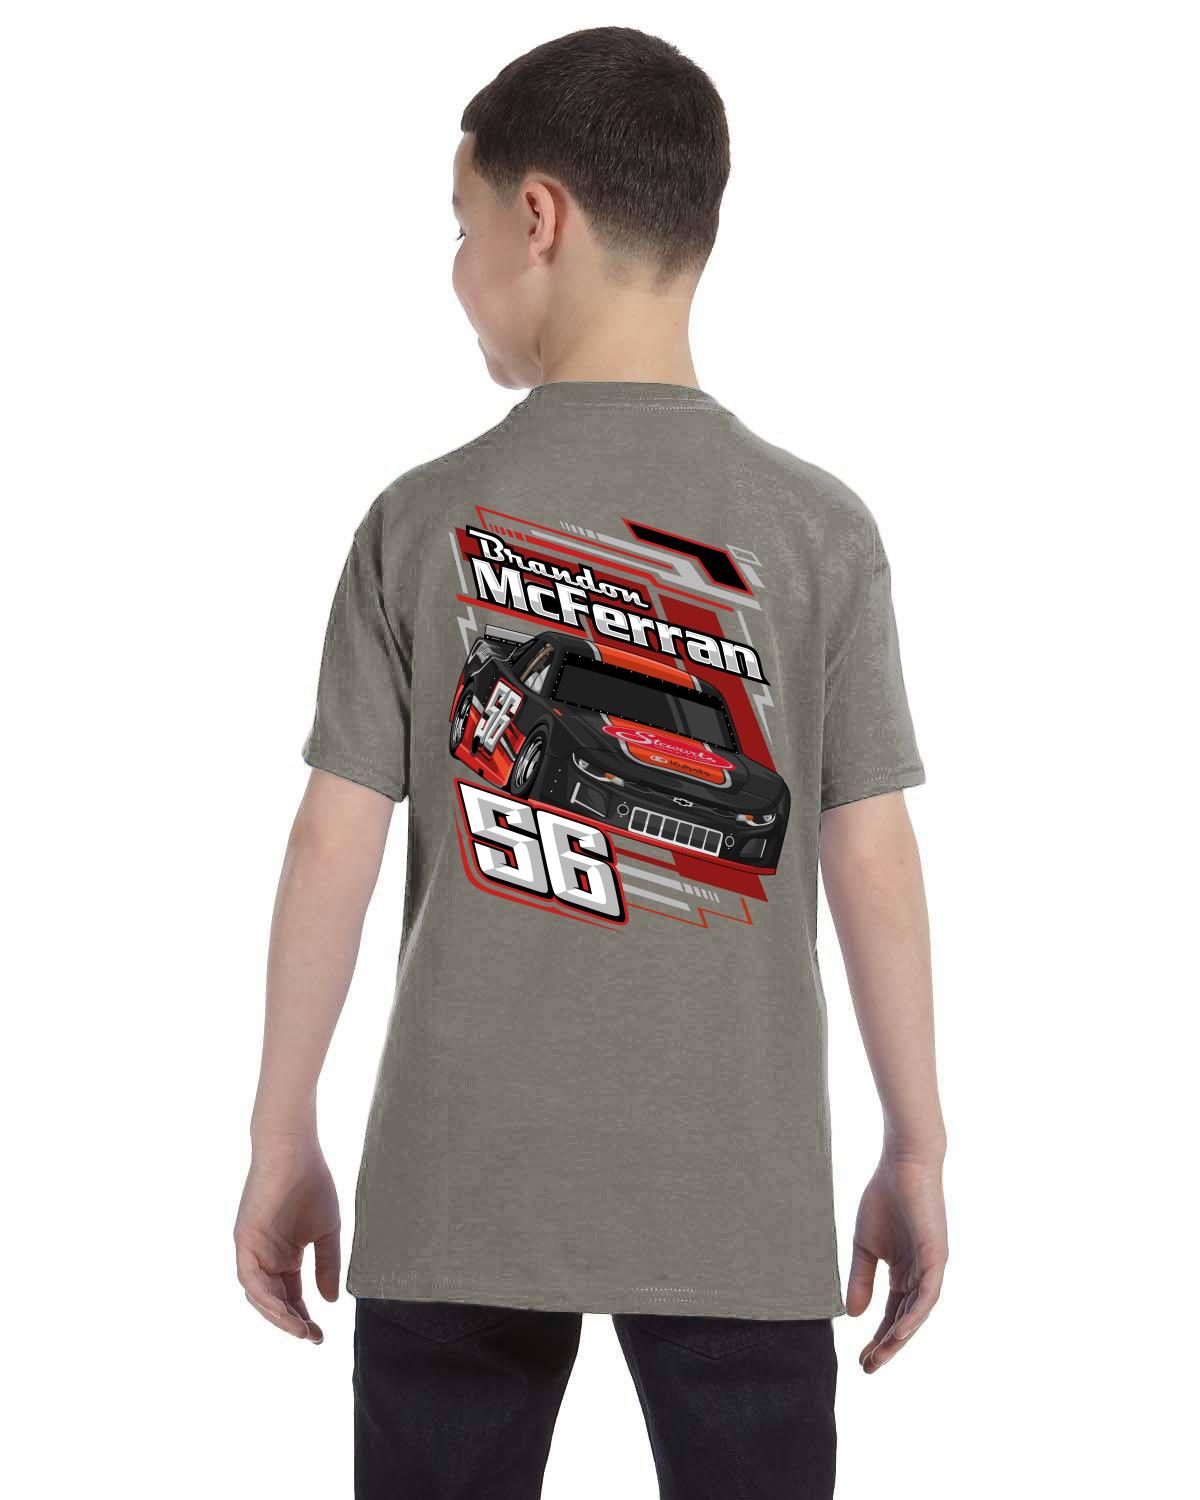 Brandon McFerran Racing Youth tshirt